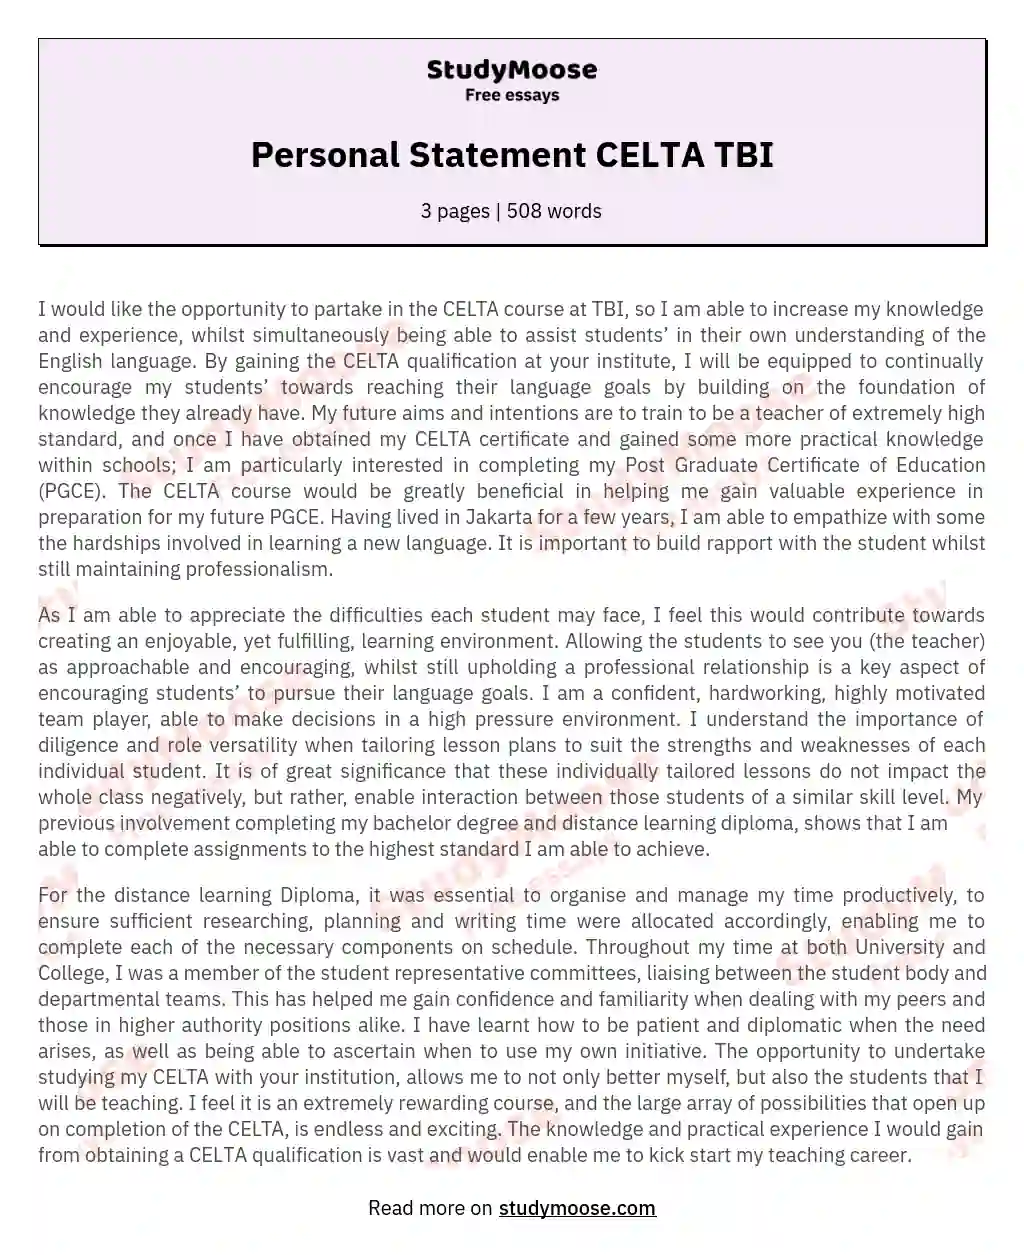 Personal Statement CELTA TBI essay